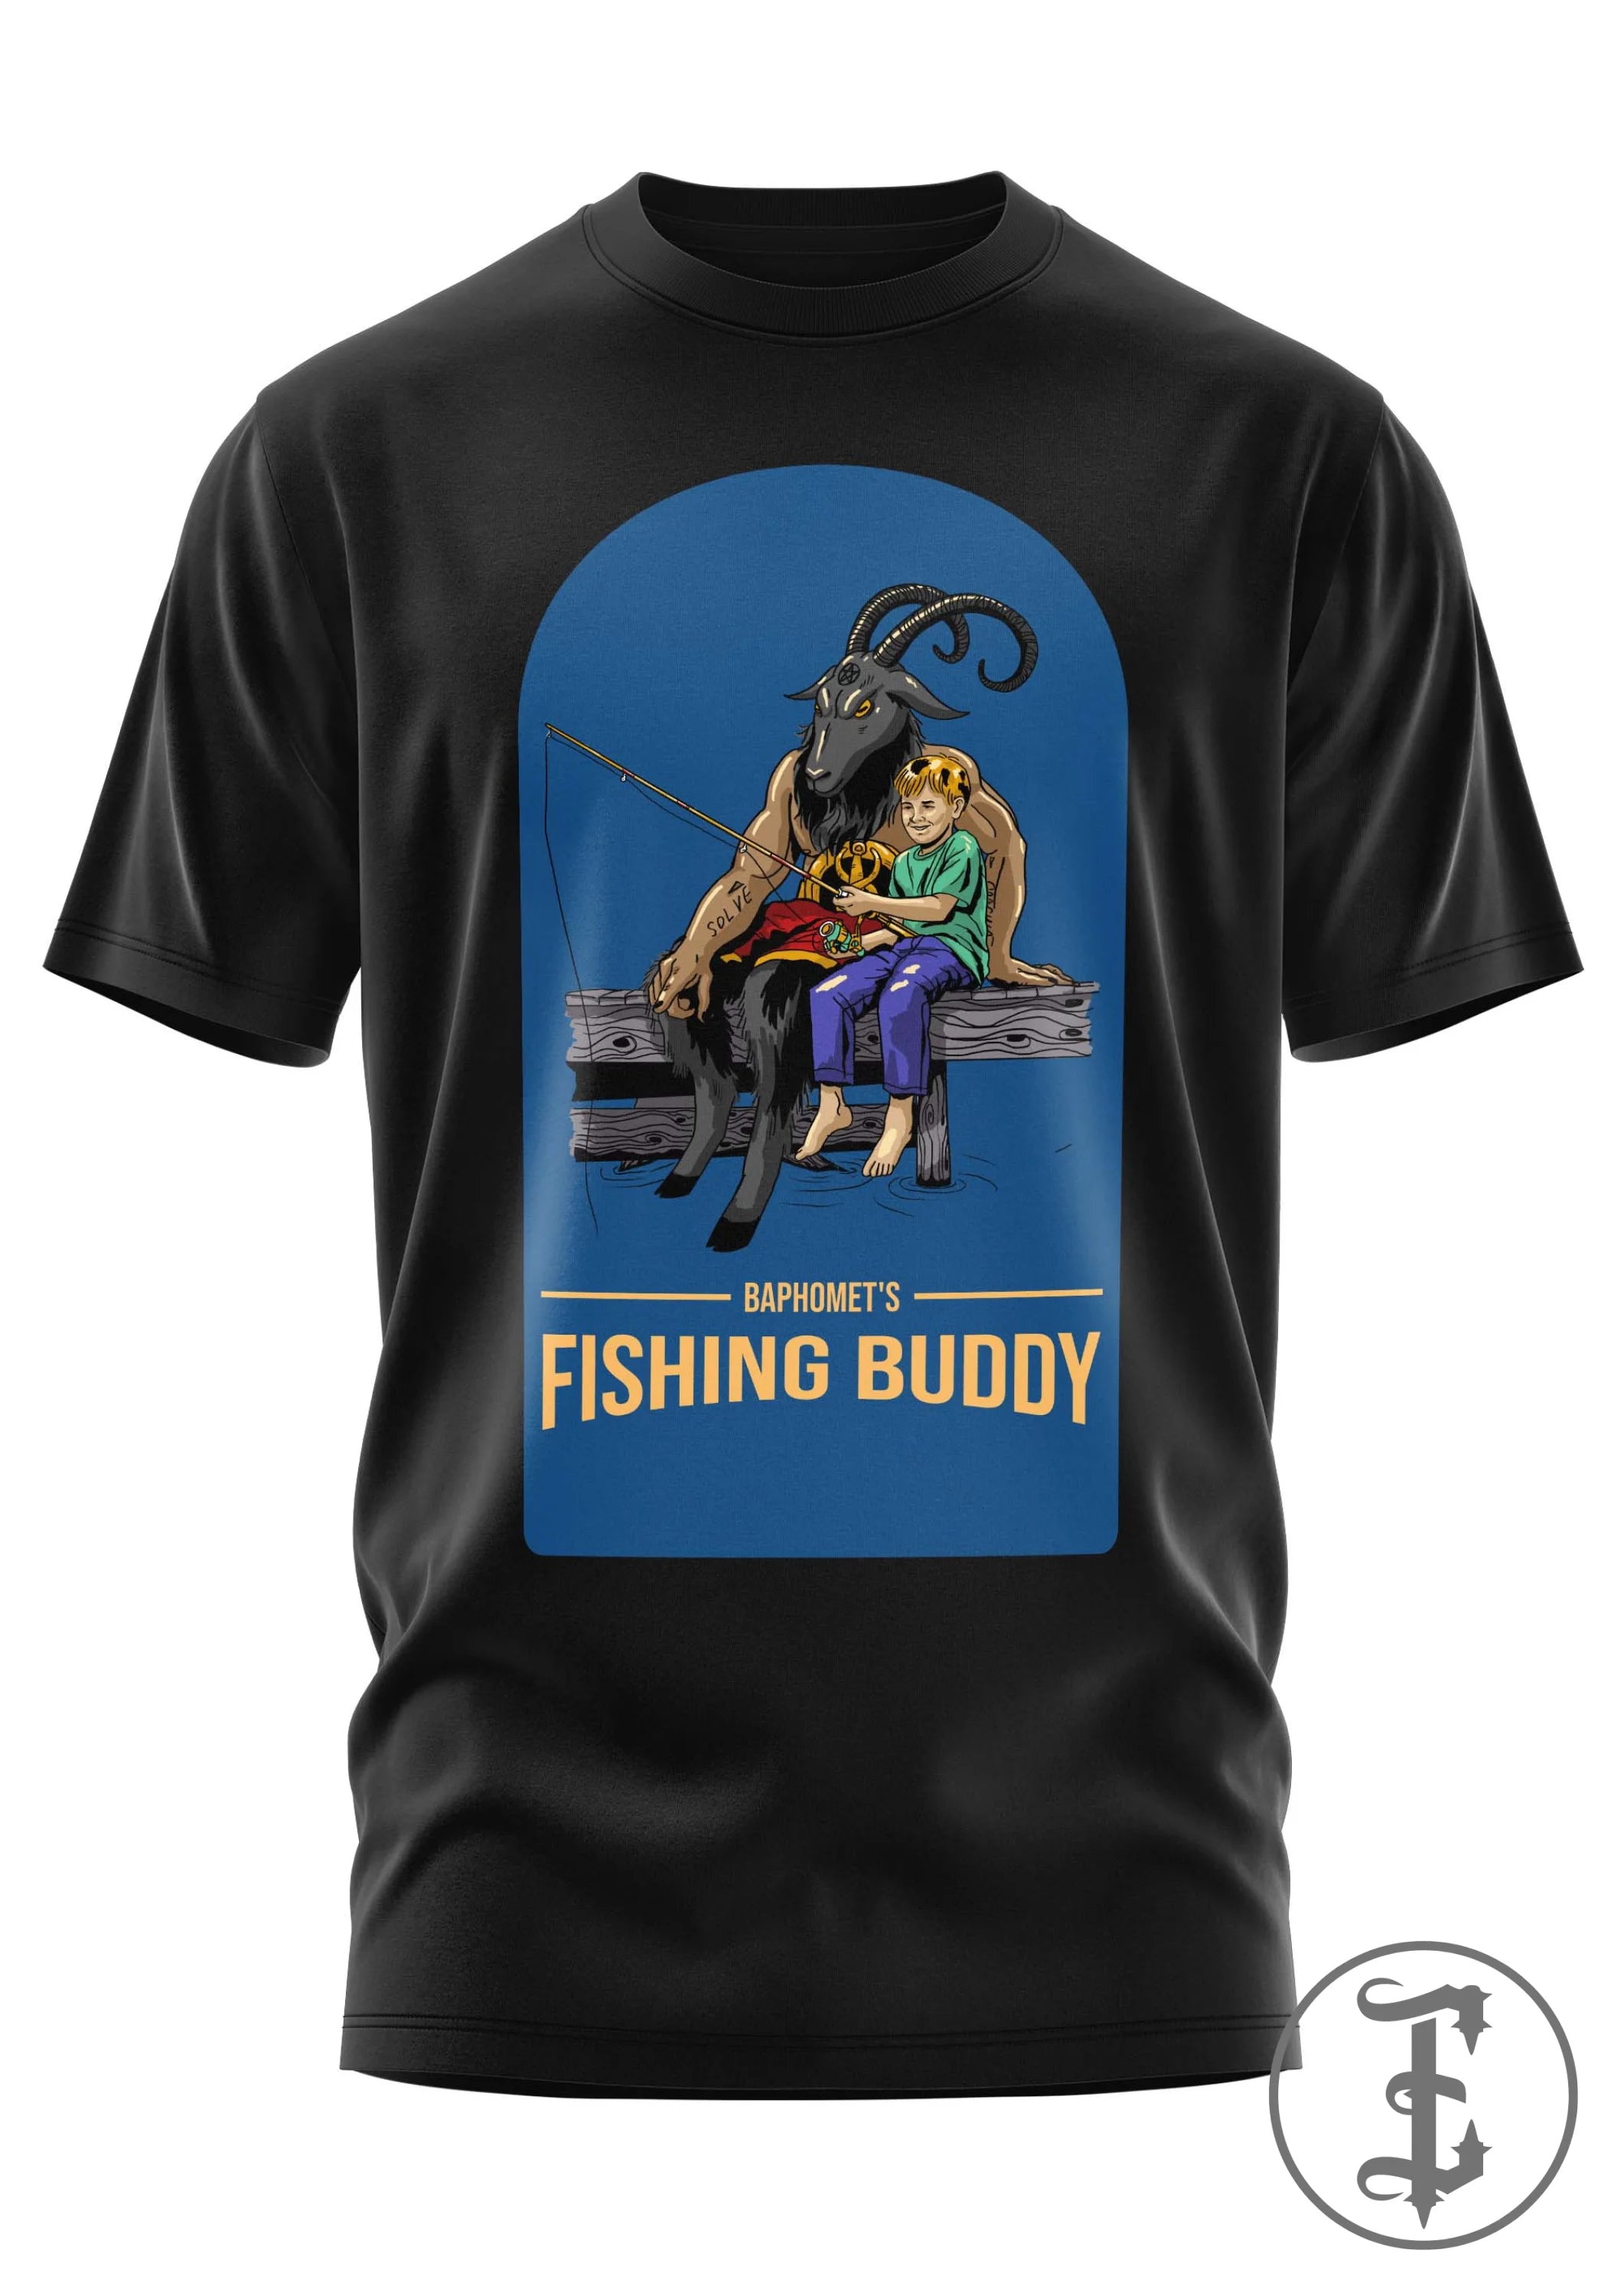 FISHING BUDDY - SHIRT - EASURE